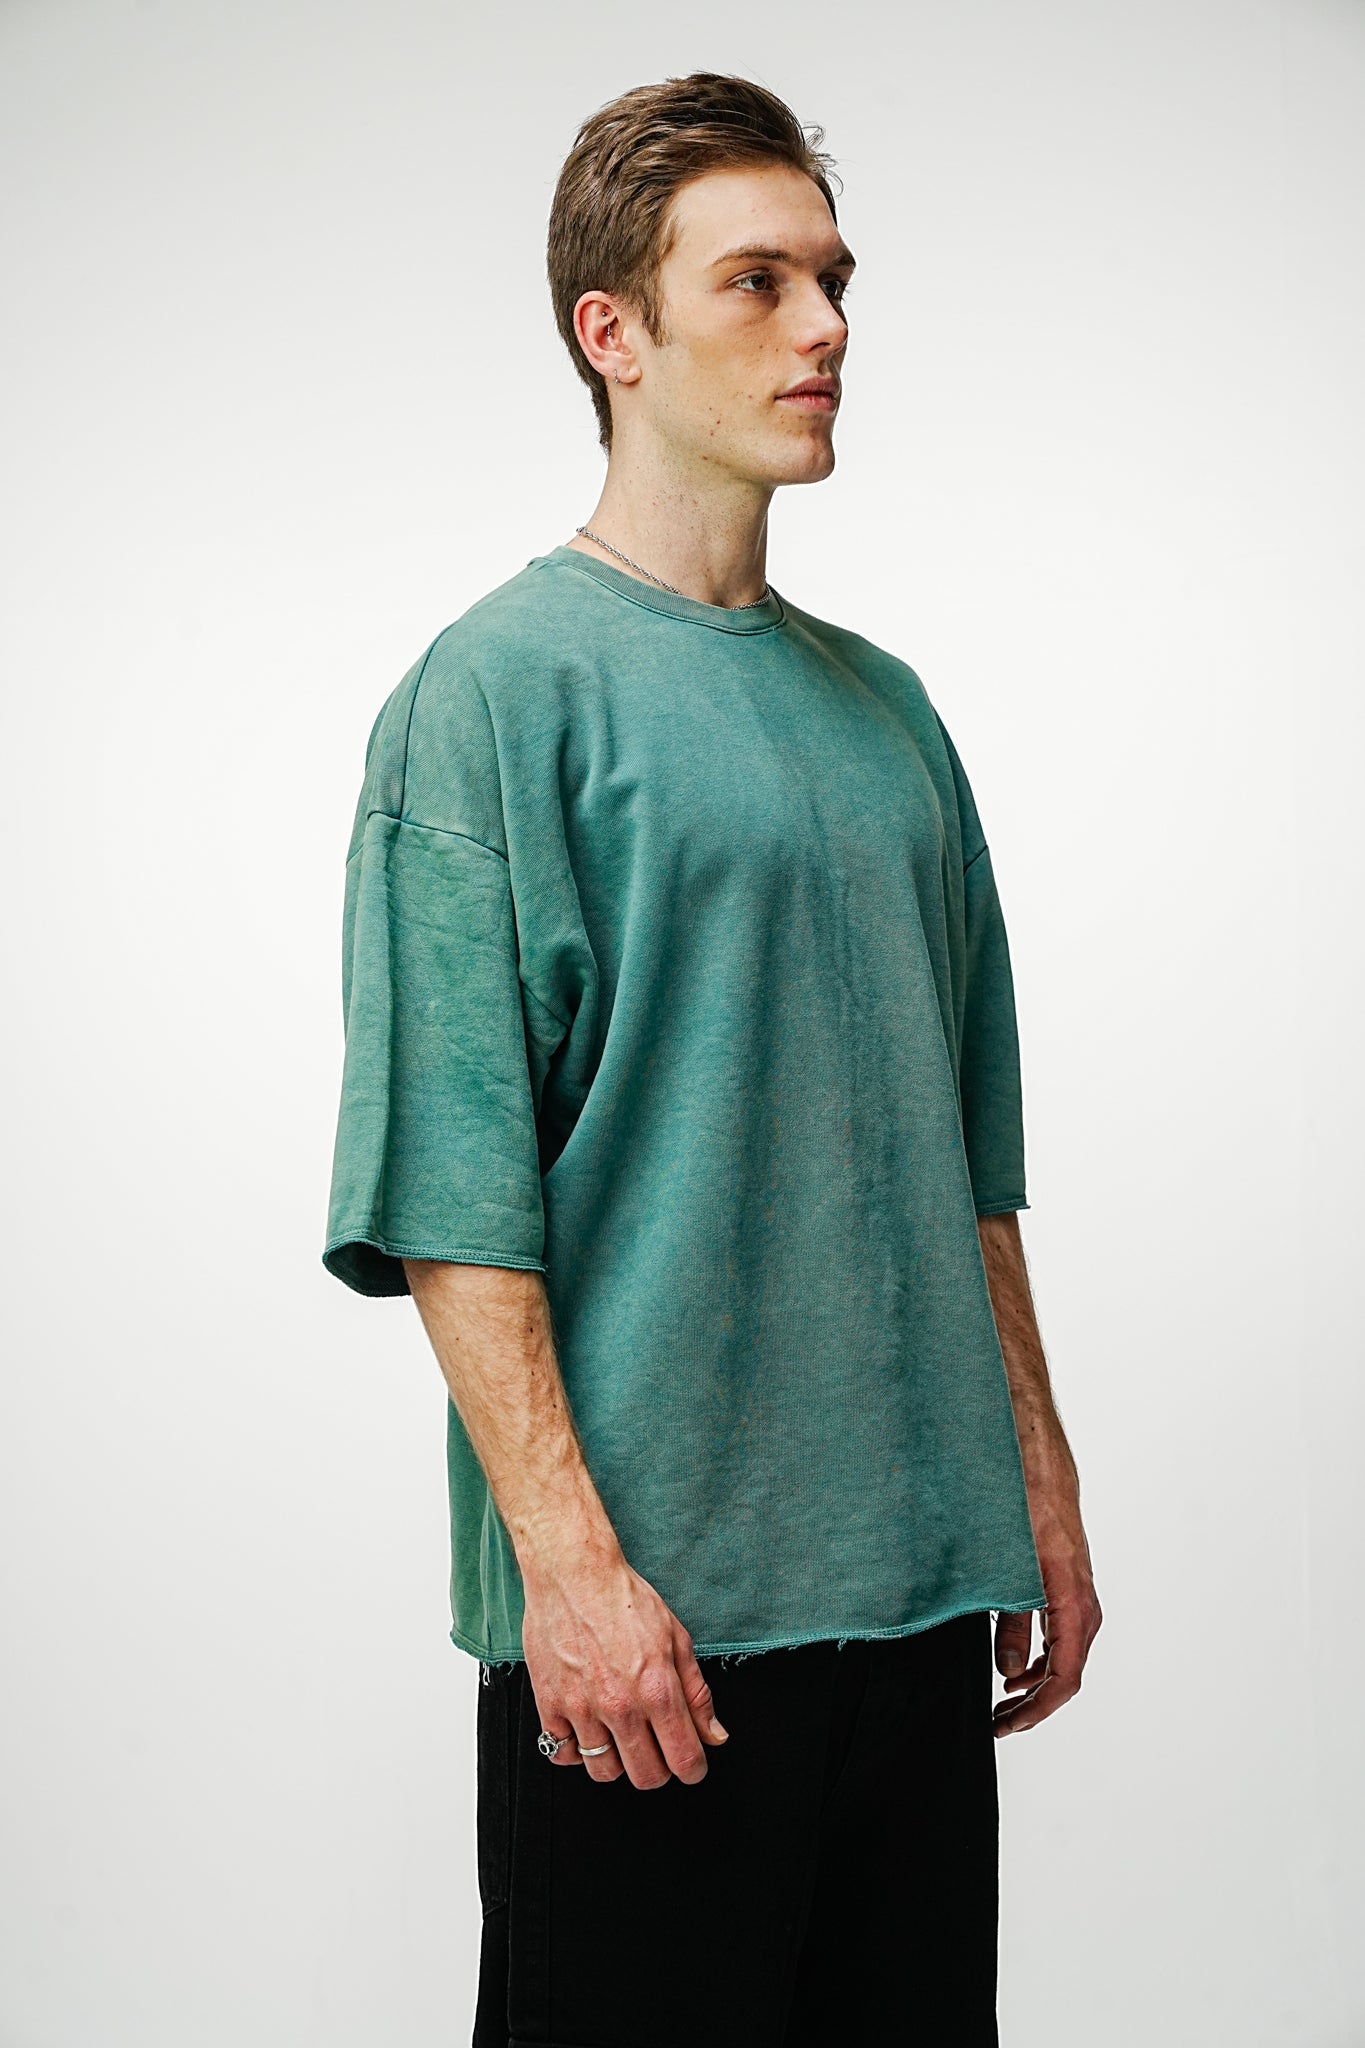 Copy of Oversized Tee - Washed Green - UNEFFECTED STUDIOS® - T-shirt - UNEFFECTED STUDIOS®